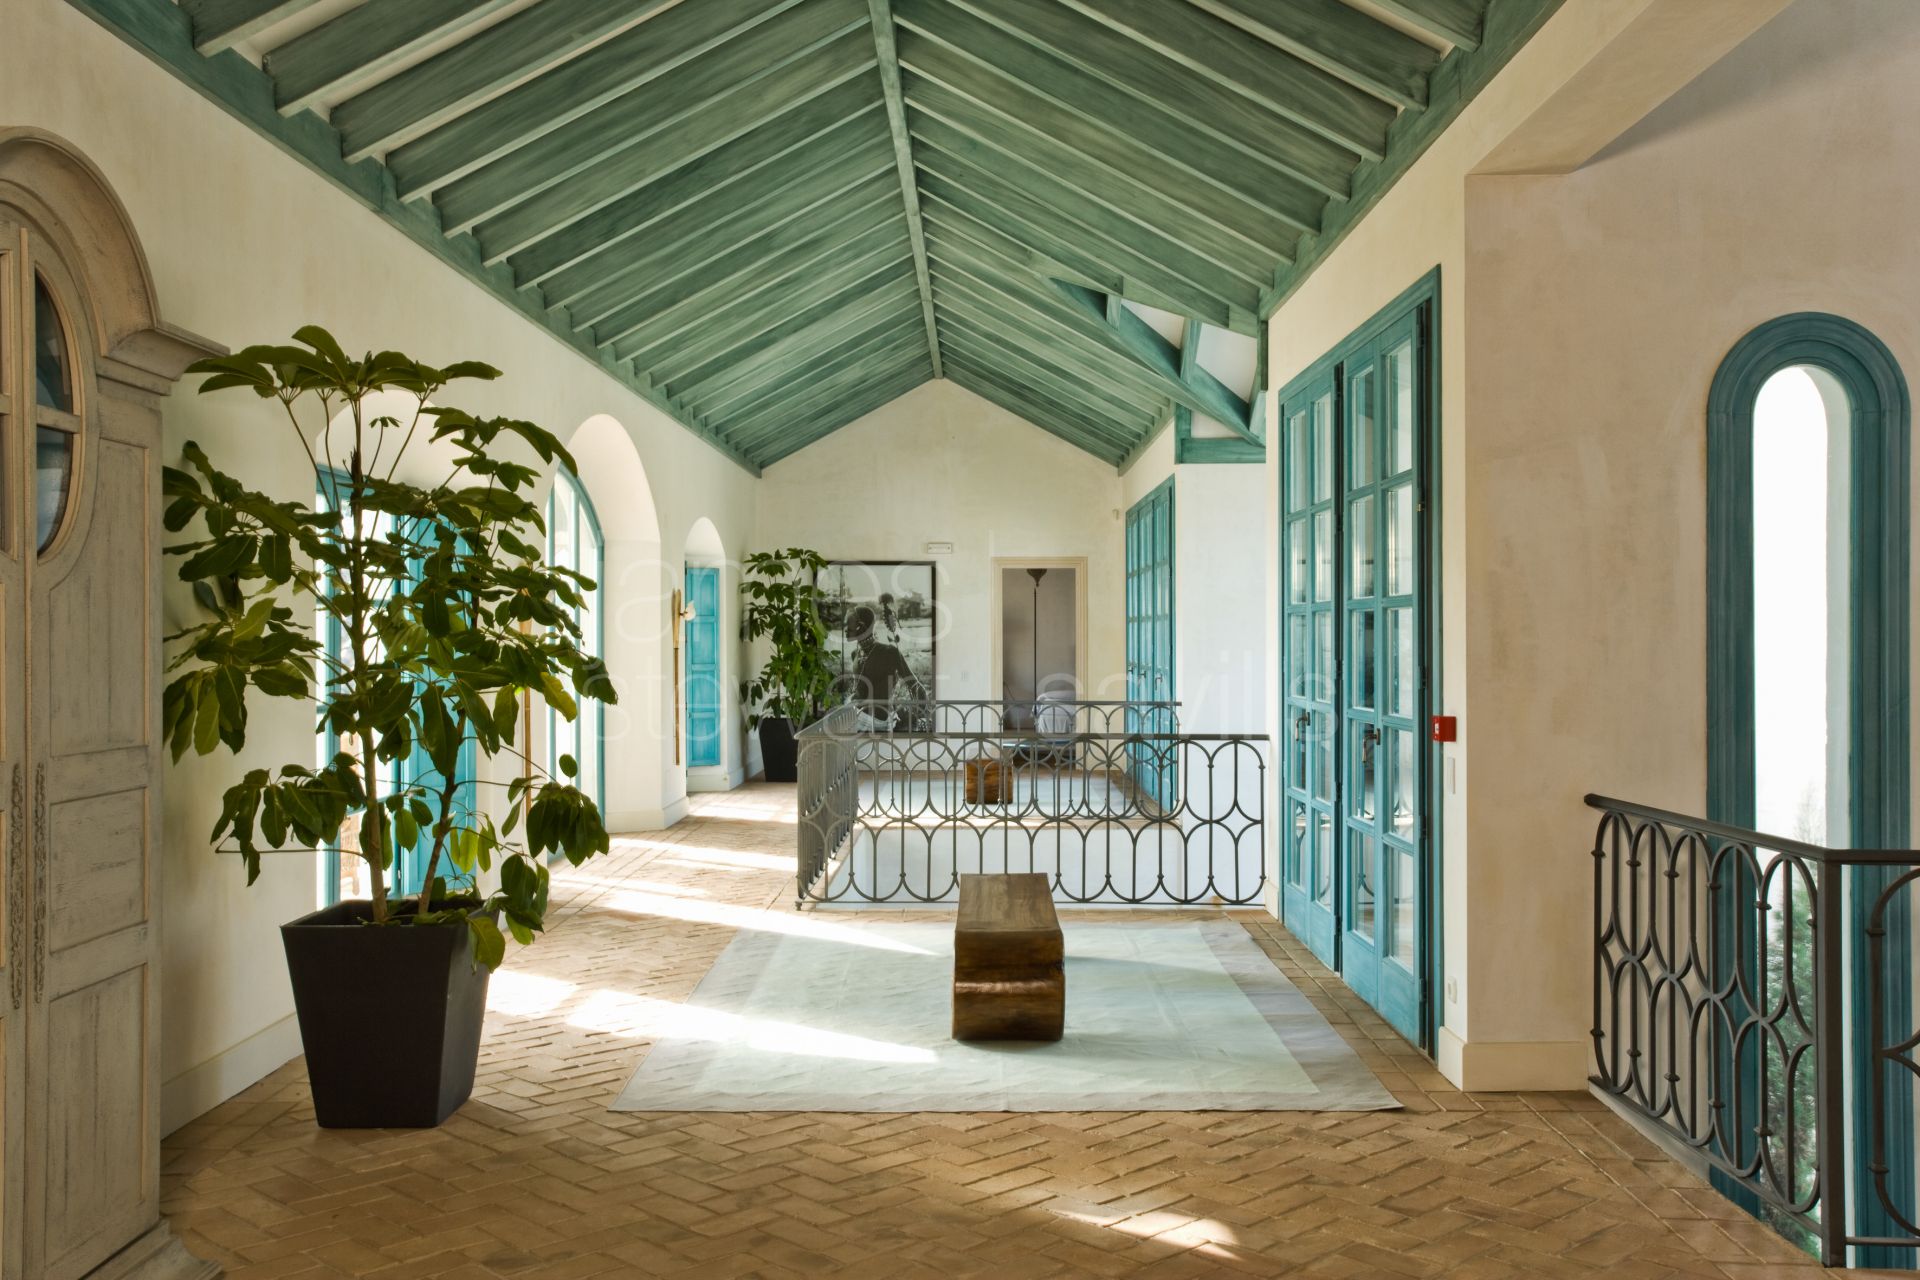 Beautiful cortijo style villa with a Provençal feel